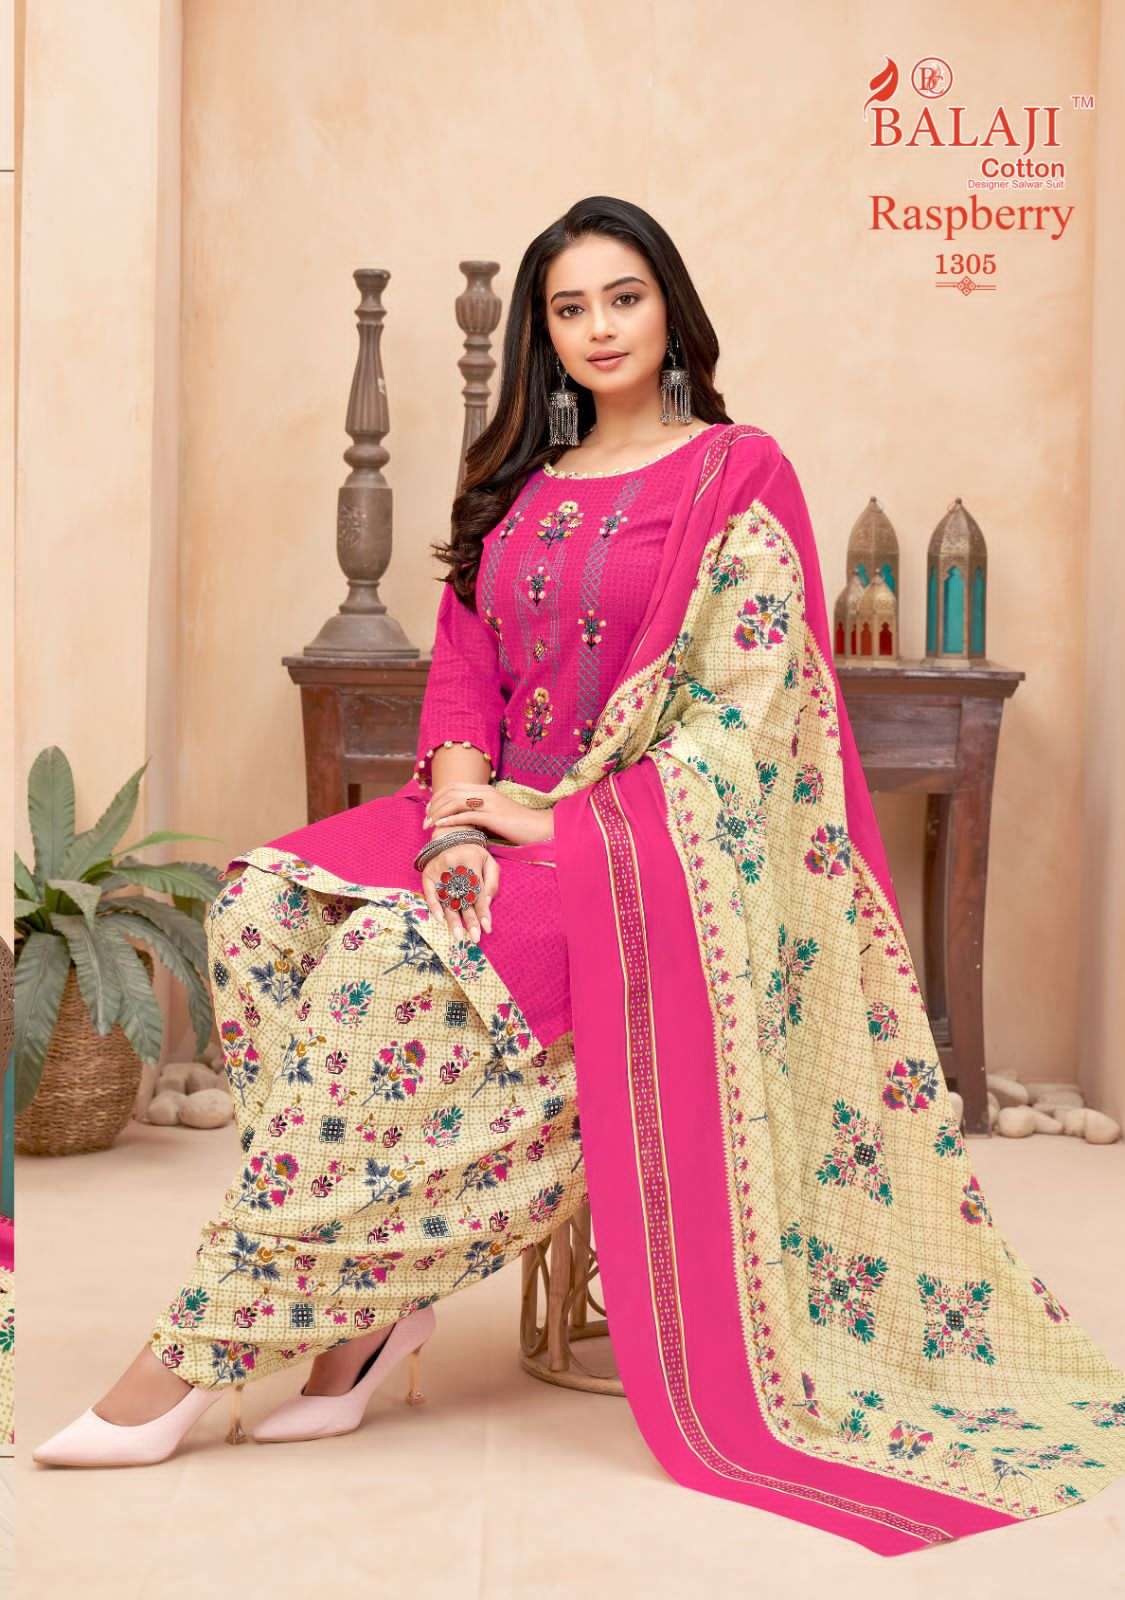 balaji cotton raspberry vol-13 1301-1311 series designer latest salwar kameez wholesaler surat gujarat